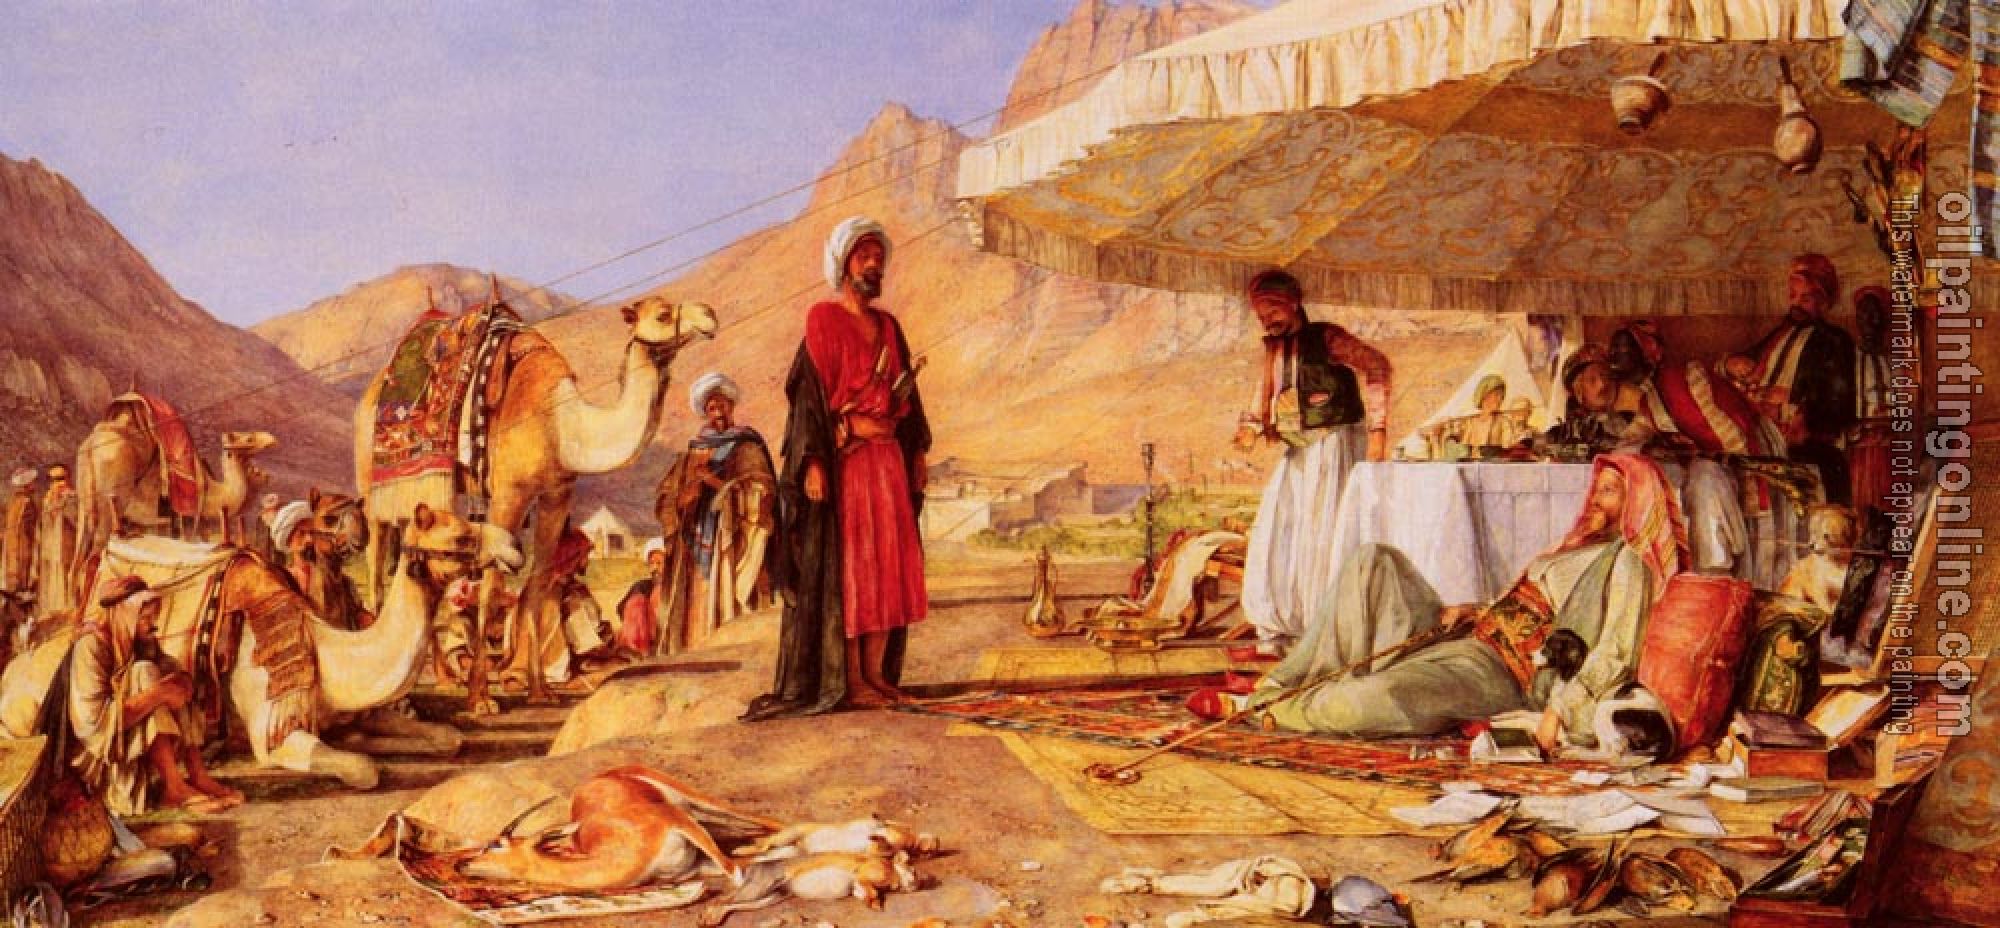 Lewis, John Frederick - A Frank Encampment In The Desert Of Mount Sinai